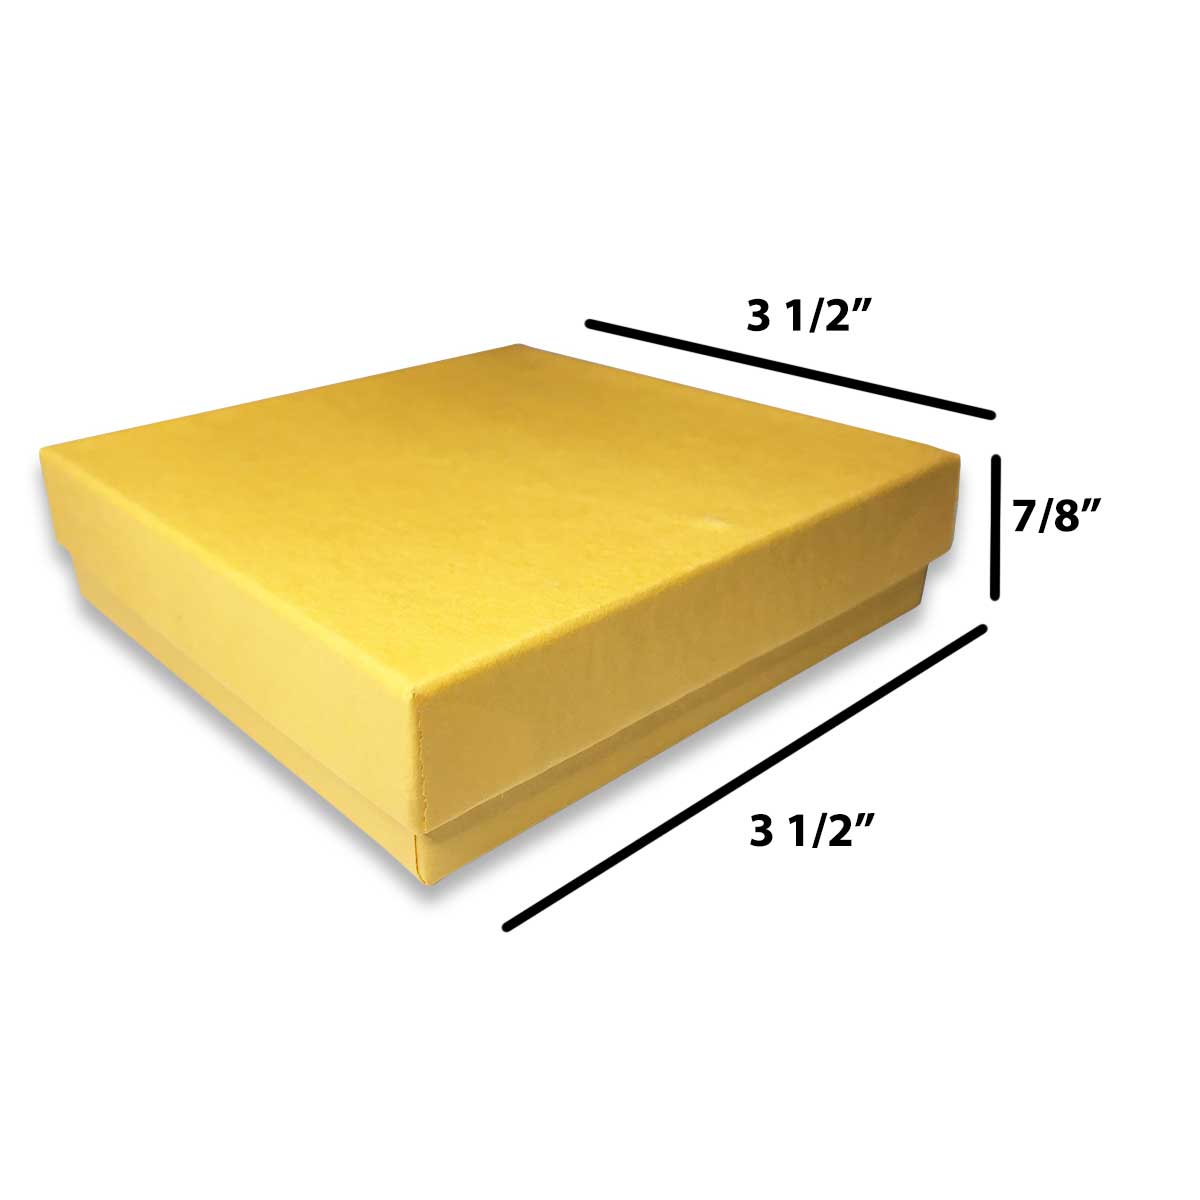 Yellow Kraft Cotton Filled Box 3 1/2" x 3 1/2" x 7/8"H